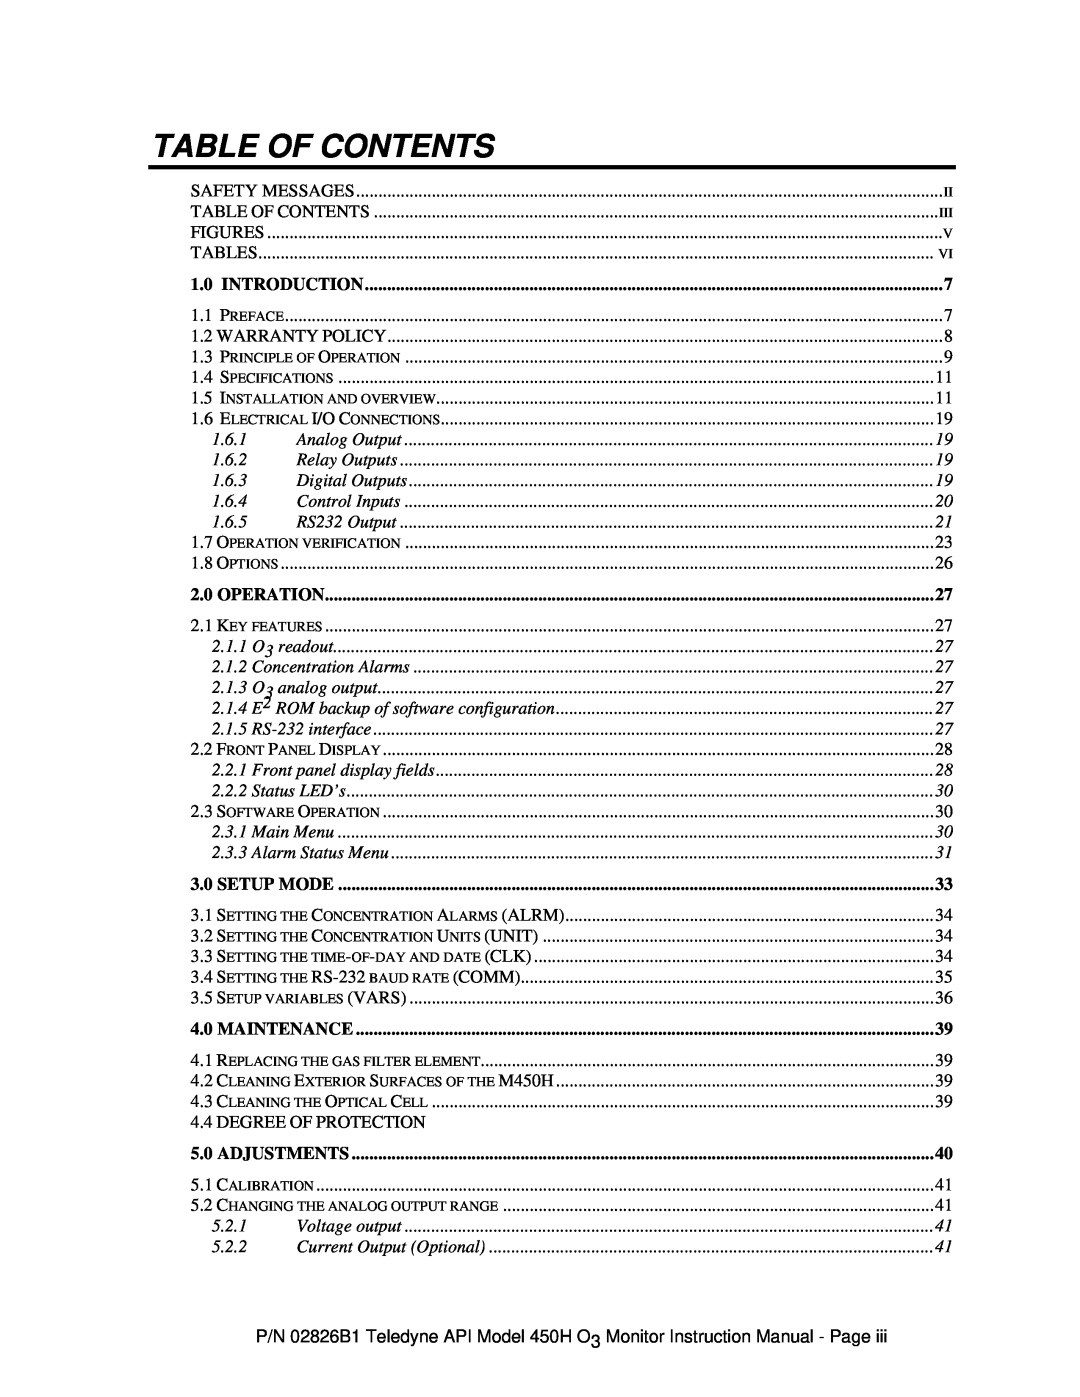 Teledyne 450H instruction manual Table Of Contents, Introduction, Operation, Setup Mode, Maintenance, Adjustments 